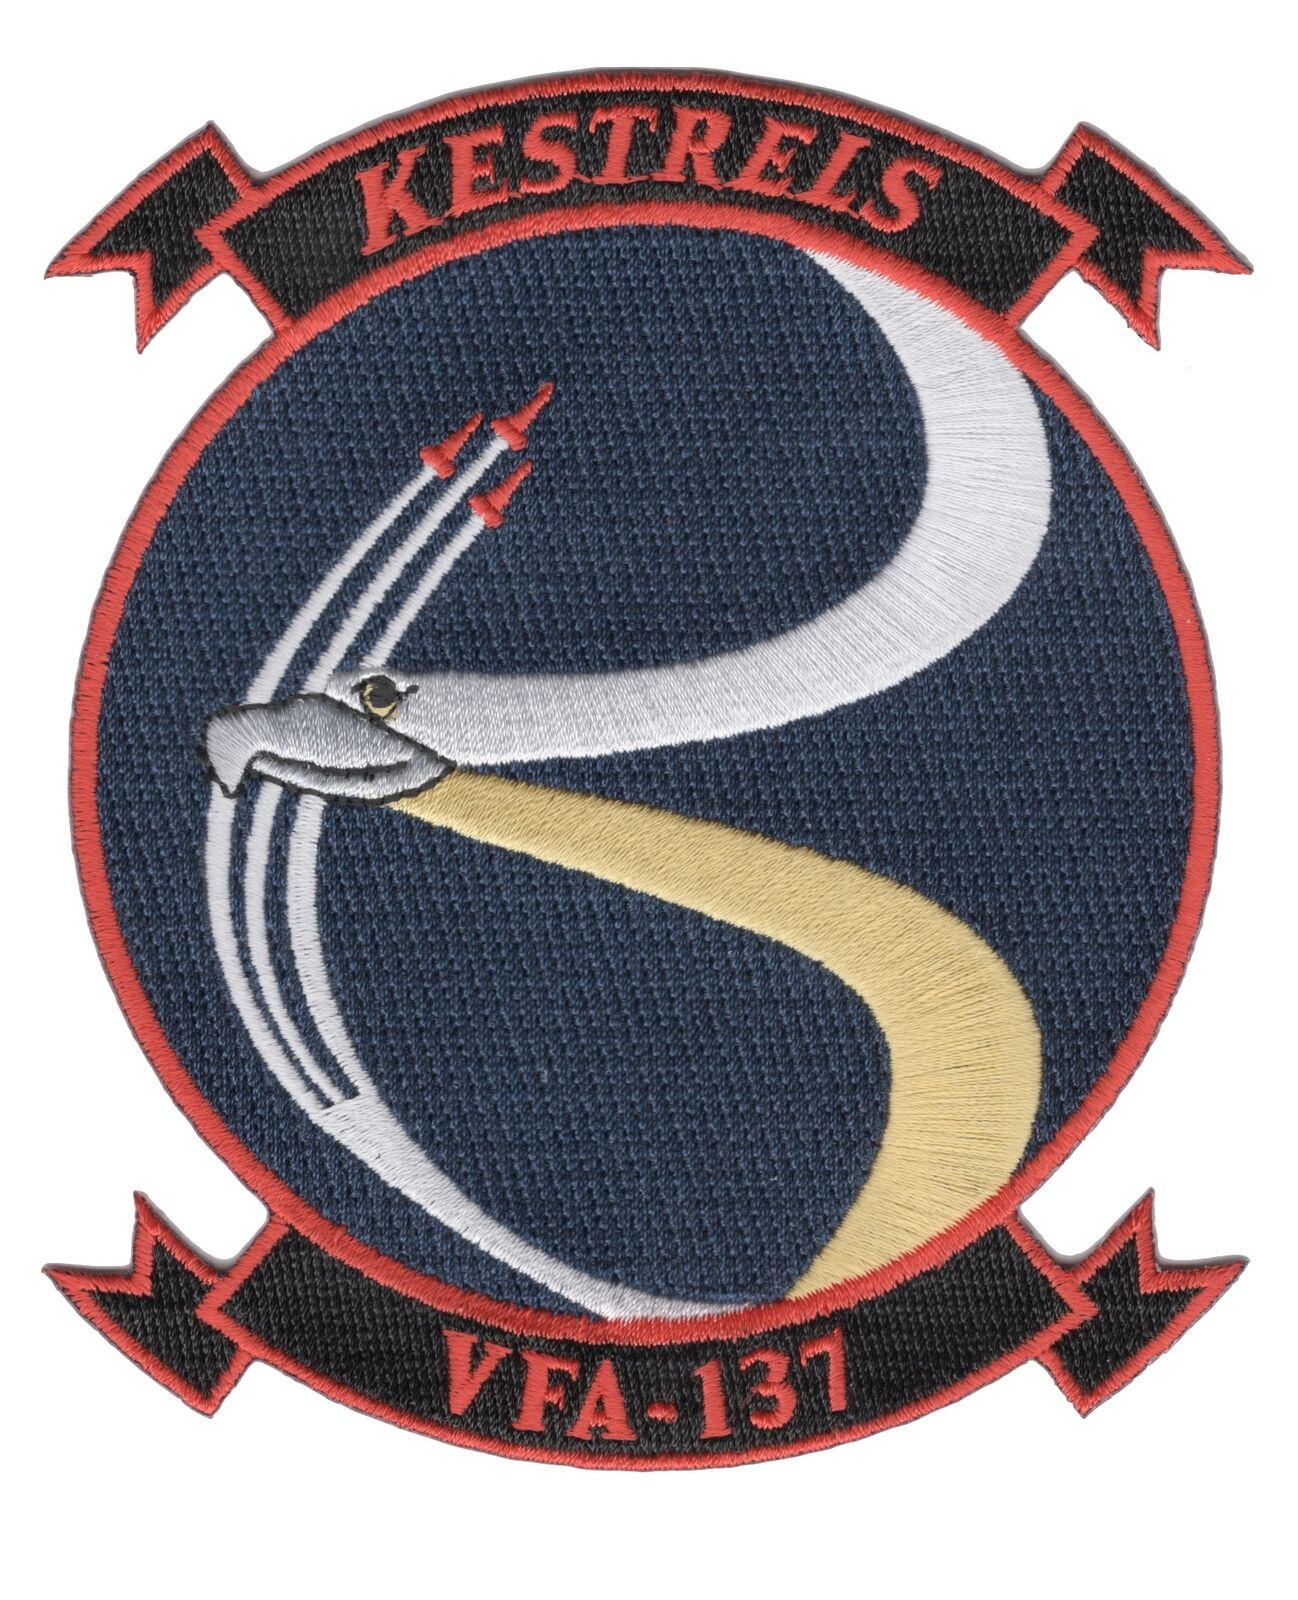 VFA-137 Patch Kestrels